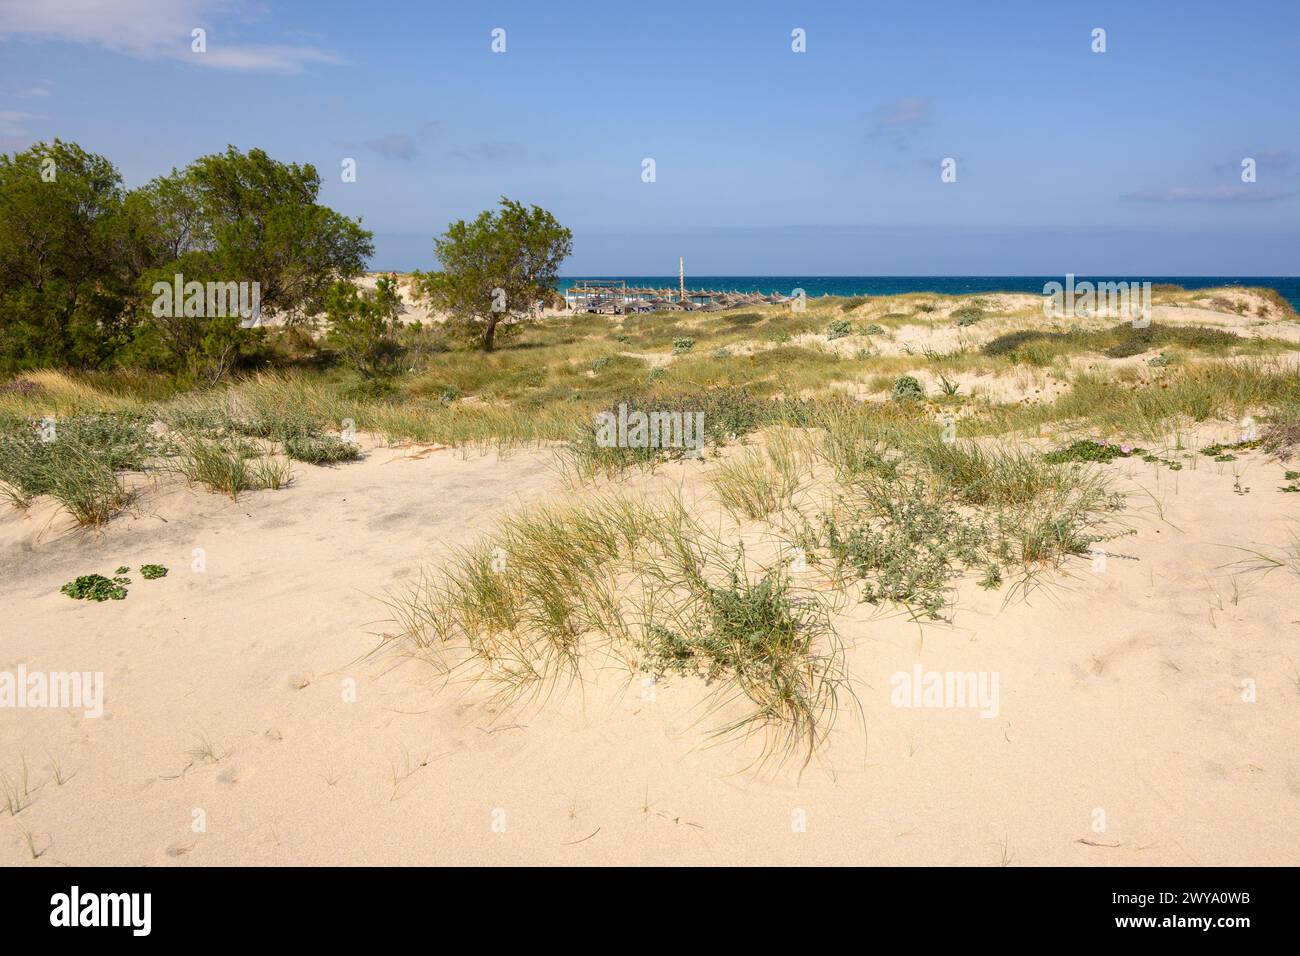 Sand dunes at Marmari beach on the island of Kos. Greece Stock Photo